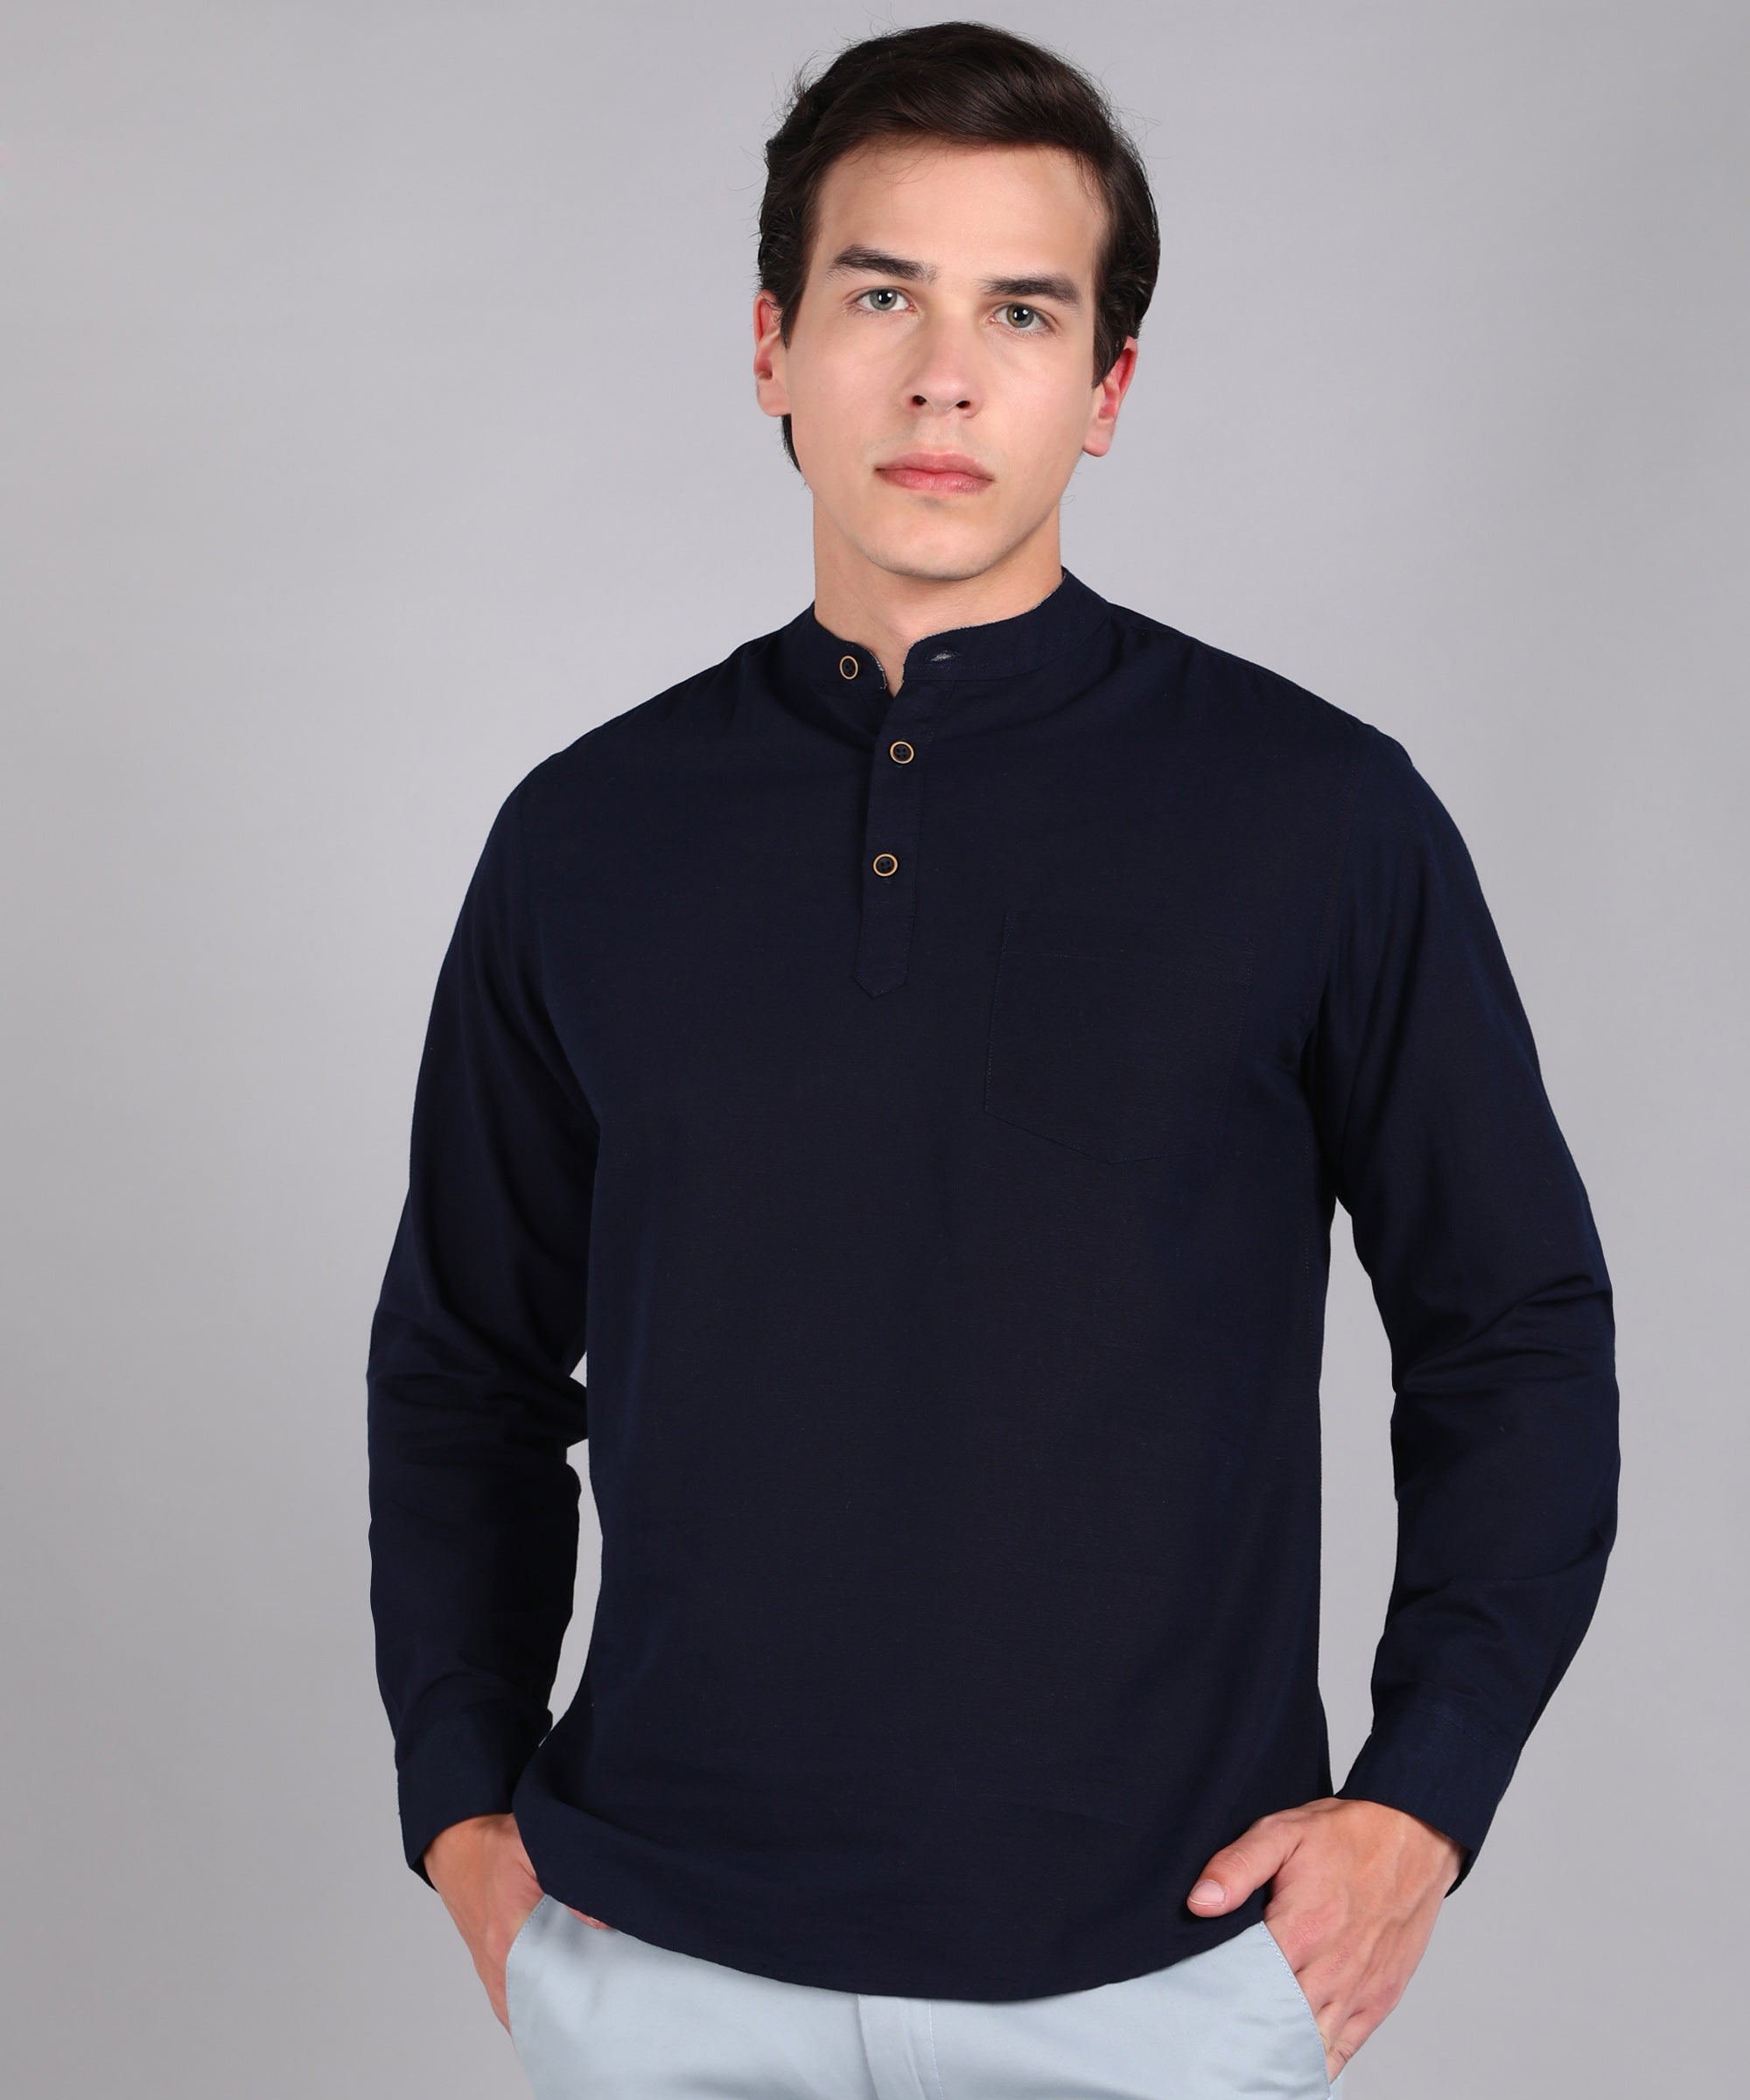 Men's Navy Blue Cotton Full Sleeve Slim Fit Solid Shirt with Mandarin Collar